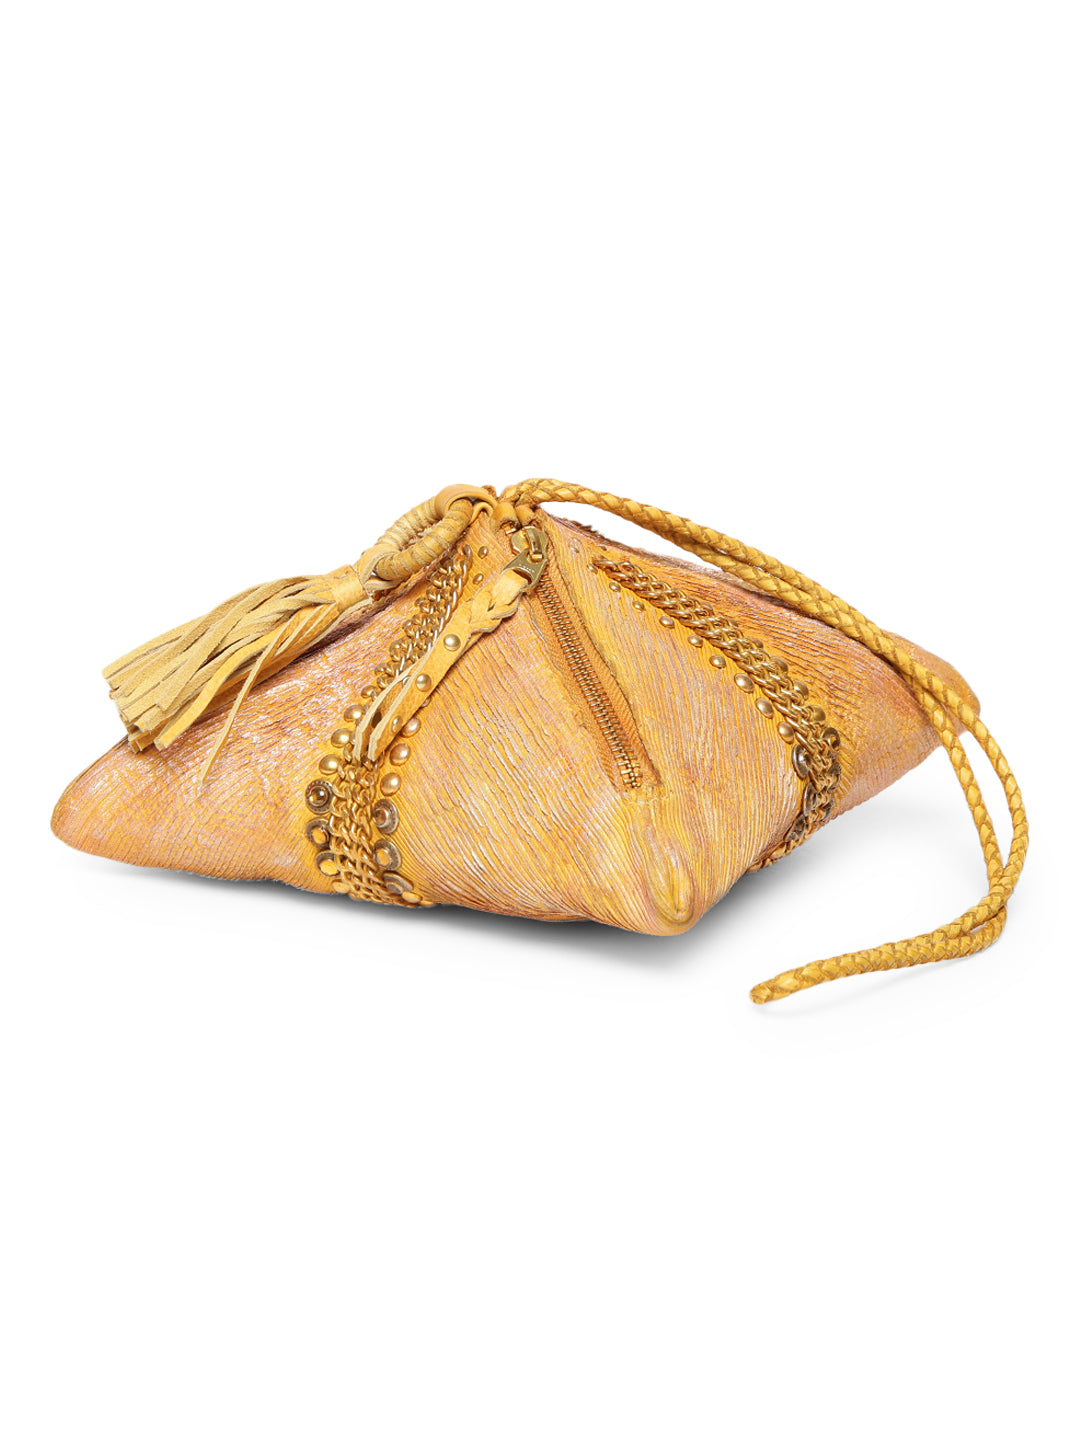 SILVIA: Sunny Yellow Sleek Leather Bag in Triangular Form By Art N Vintage